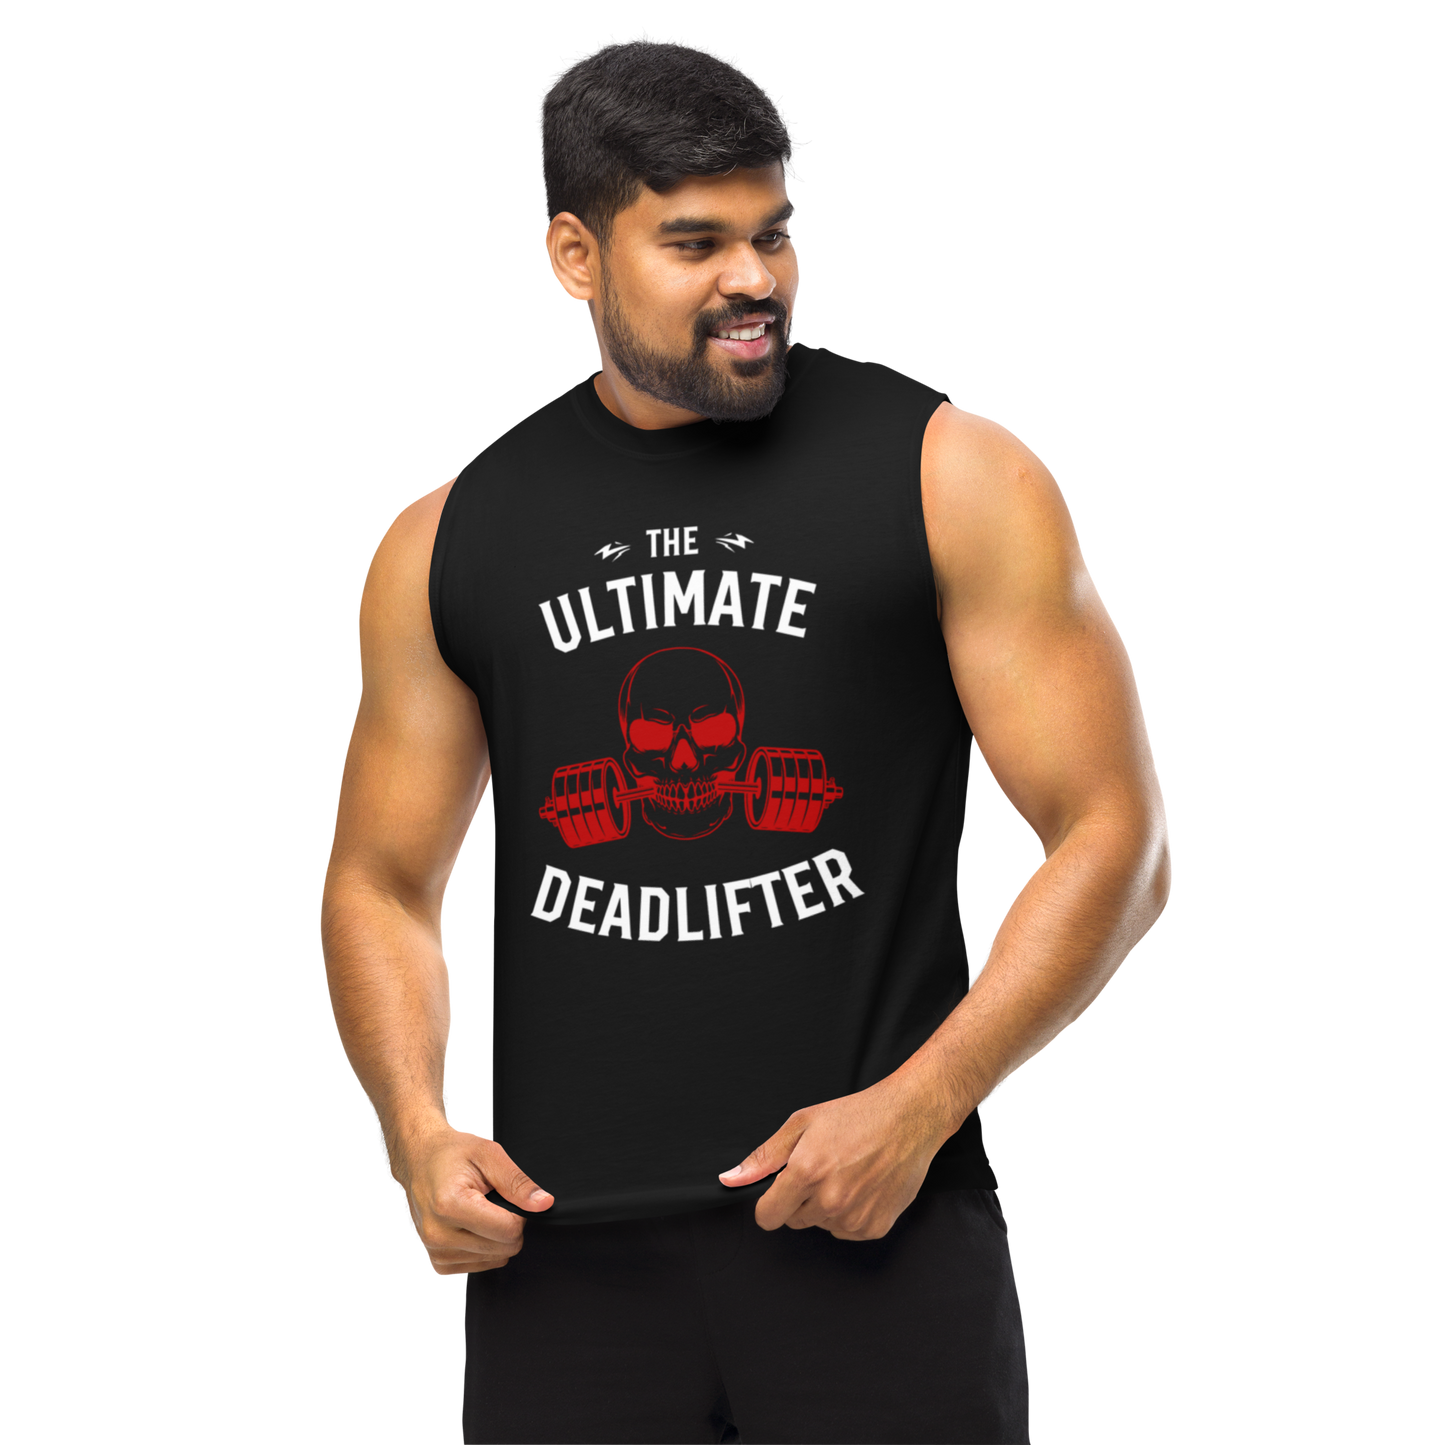 The Ultimate Deadlifter Men’s Muscle Shirt